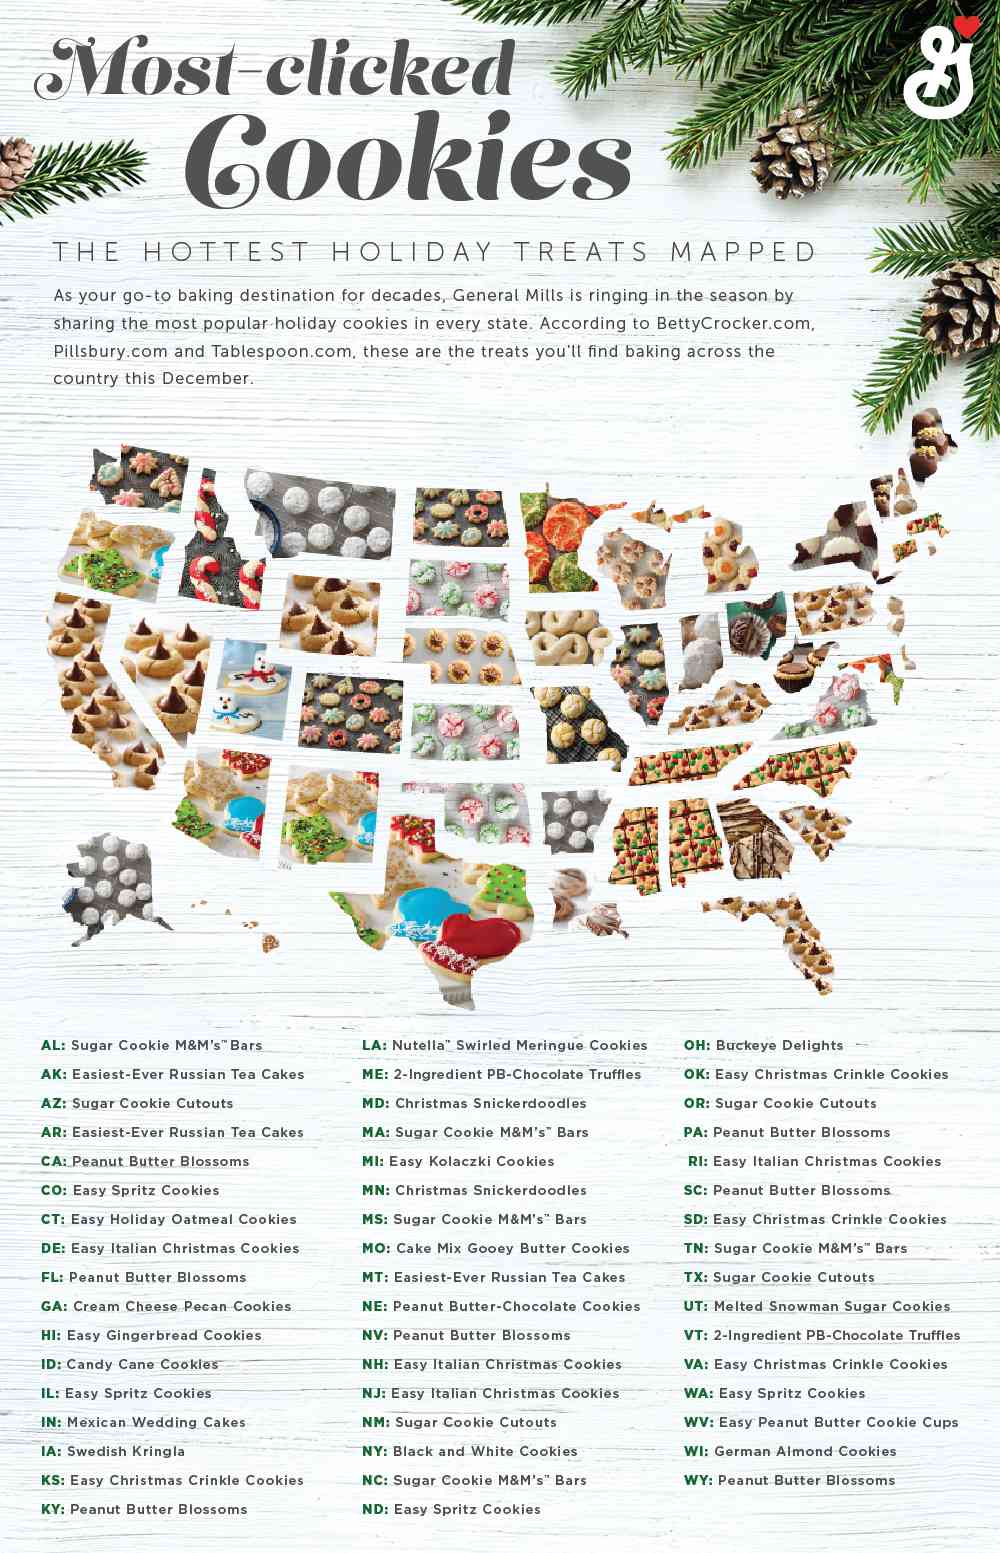 Favorite cookies and most popular Christmas cookies in America, according to General Mills